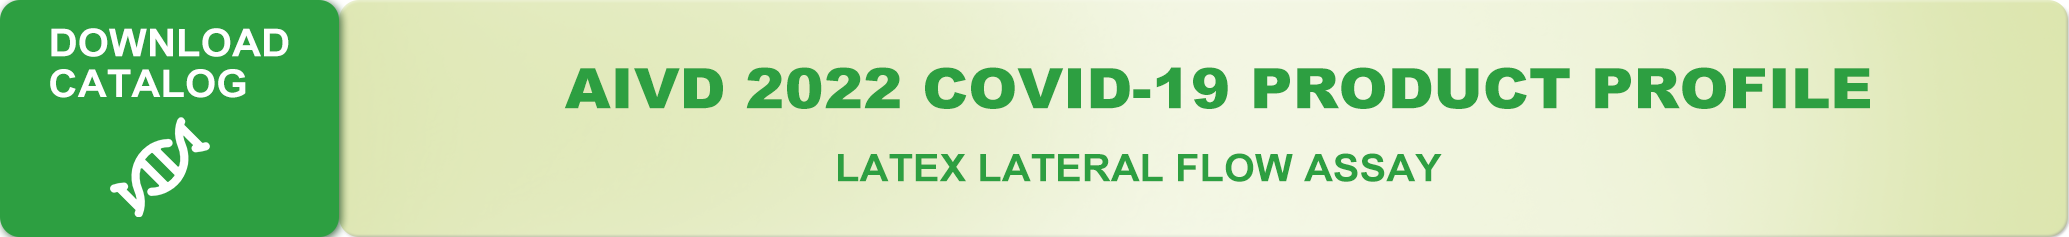 AIVD 2022 COVID-19 Product Profile